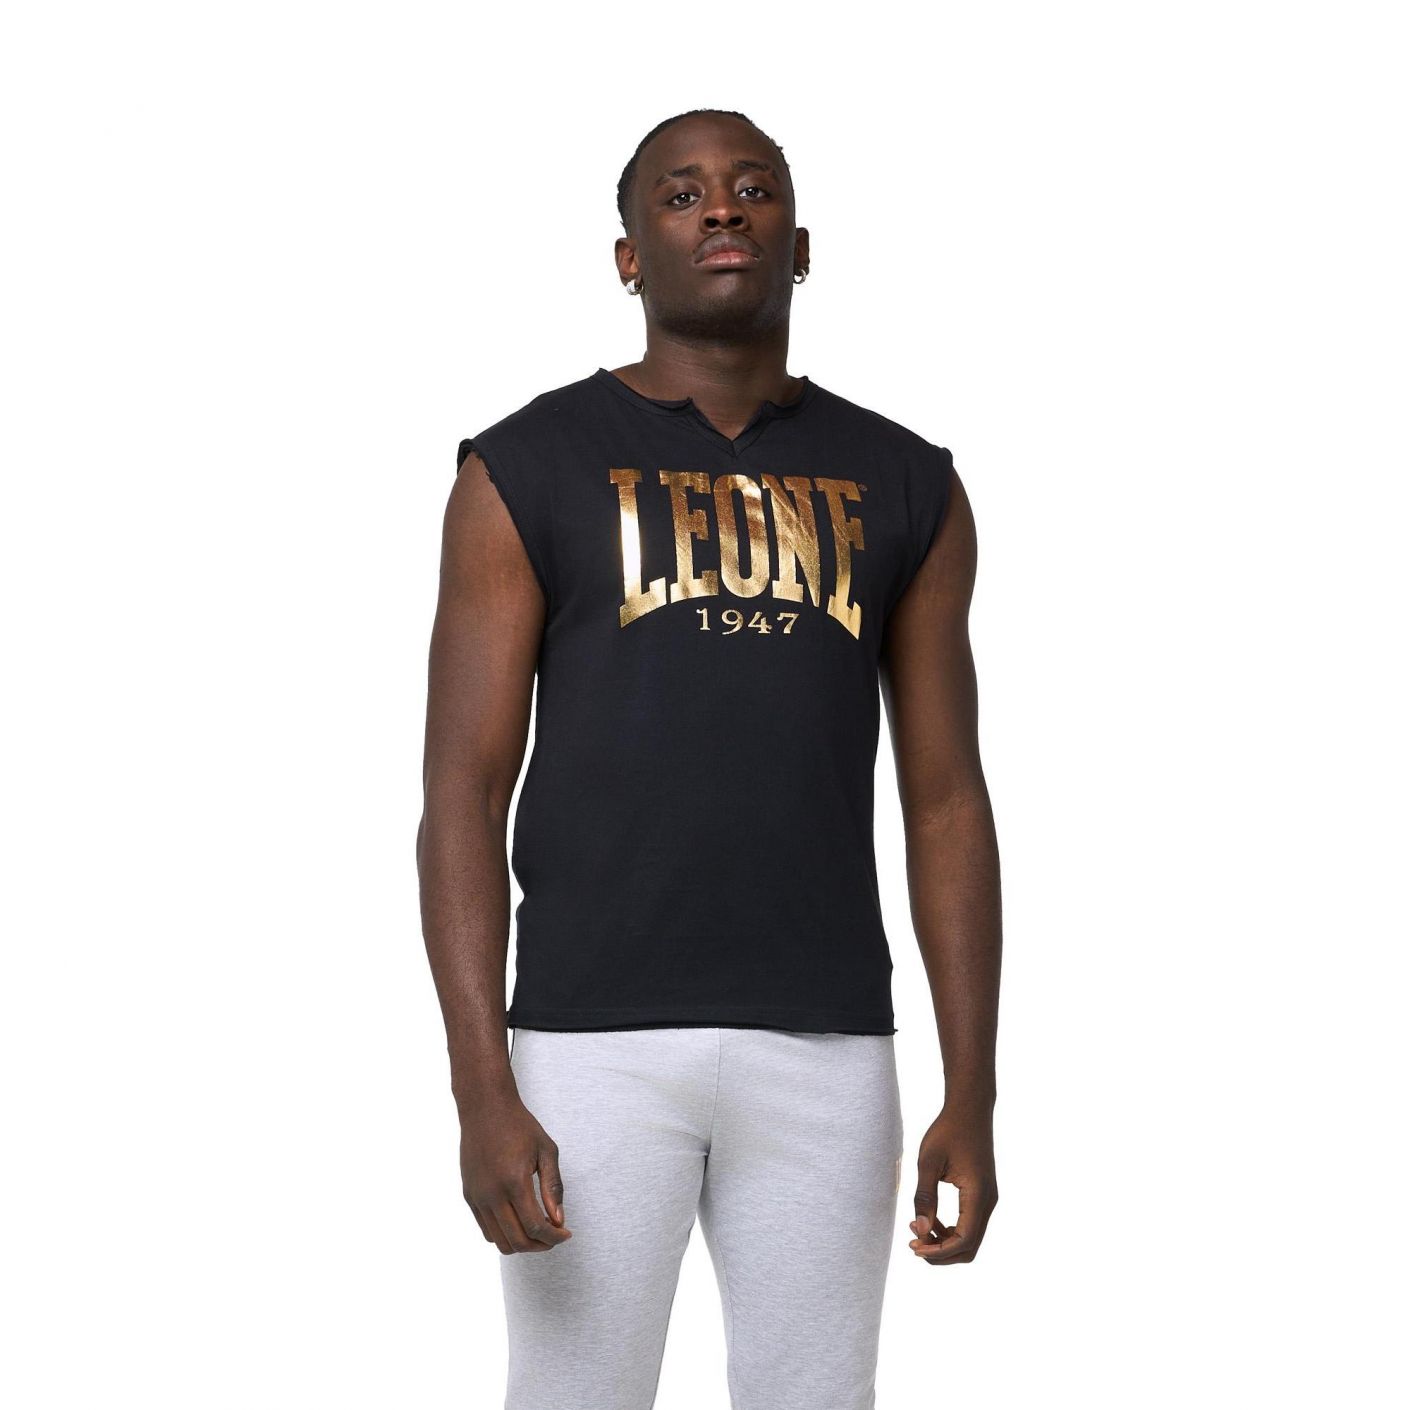 Leone T-Shirt smanicata New Gold Nera da Uomo